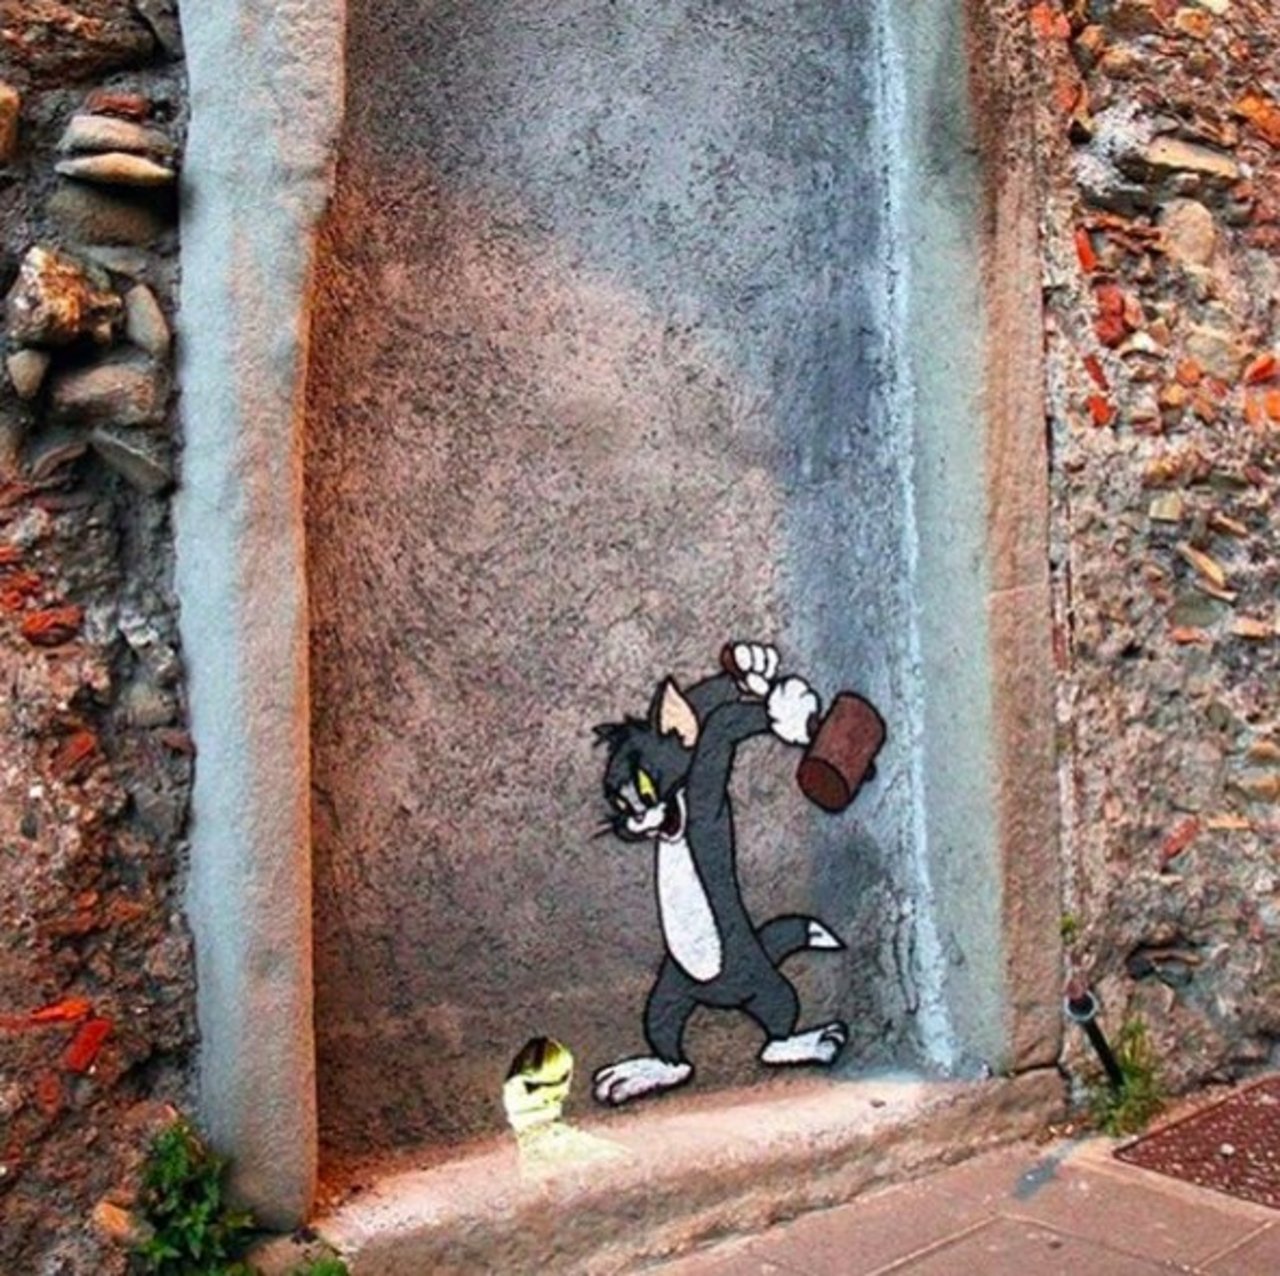 Tom from 'Tom and Jerry' in #Sicily, painted by Slava Ptrk (http://globalstreetart.com/slavaptrk). -- #globalstreetart #streetart #graffiti https://t.co/DAwrWPdLiP